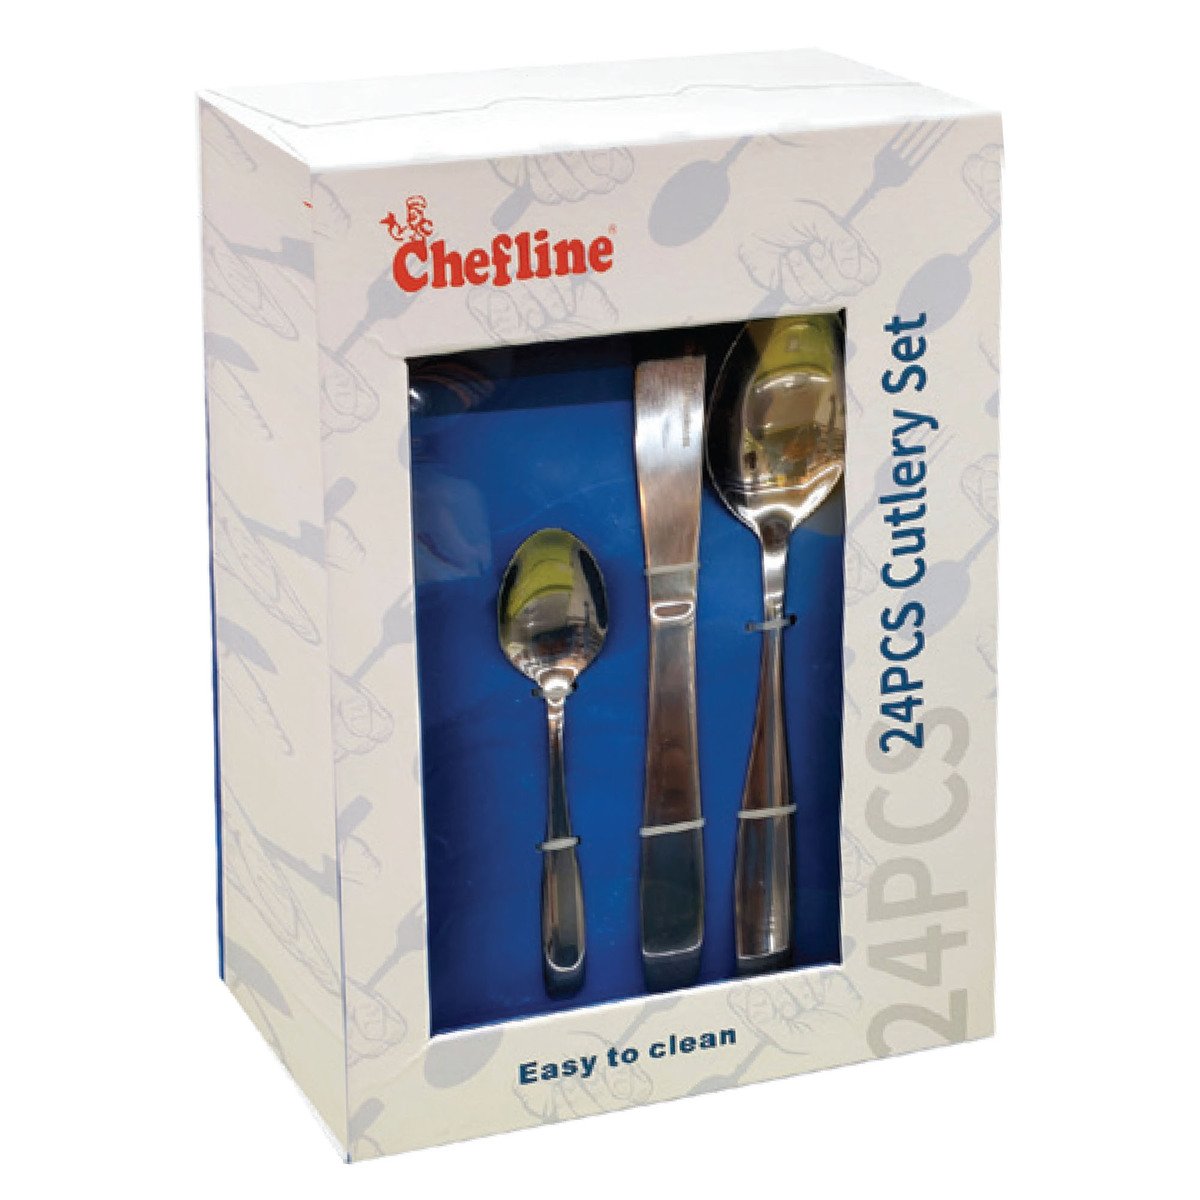 Chefline Stainless Steel Cutlery Set, FT-G020, 24 pcs